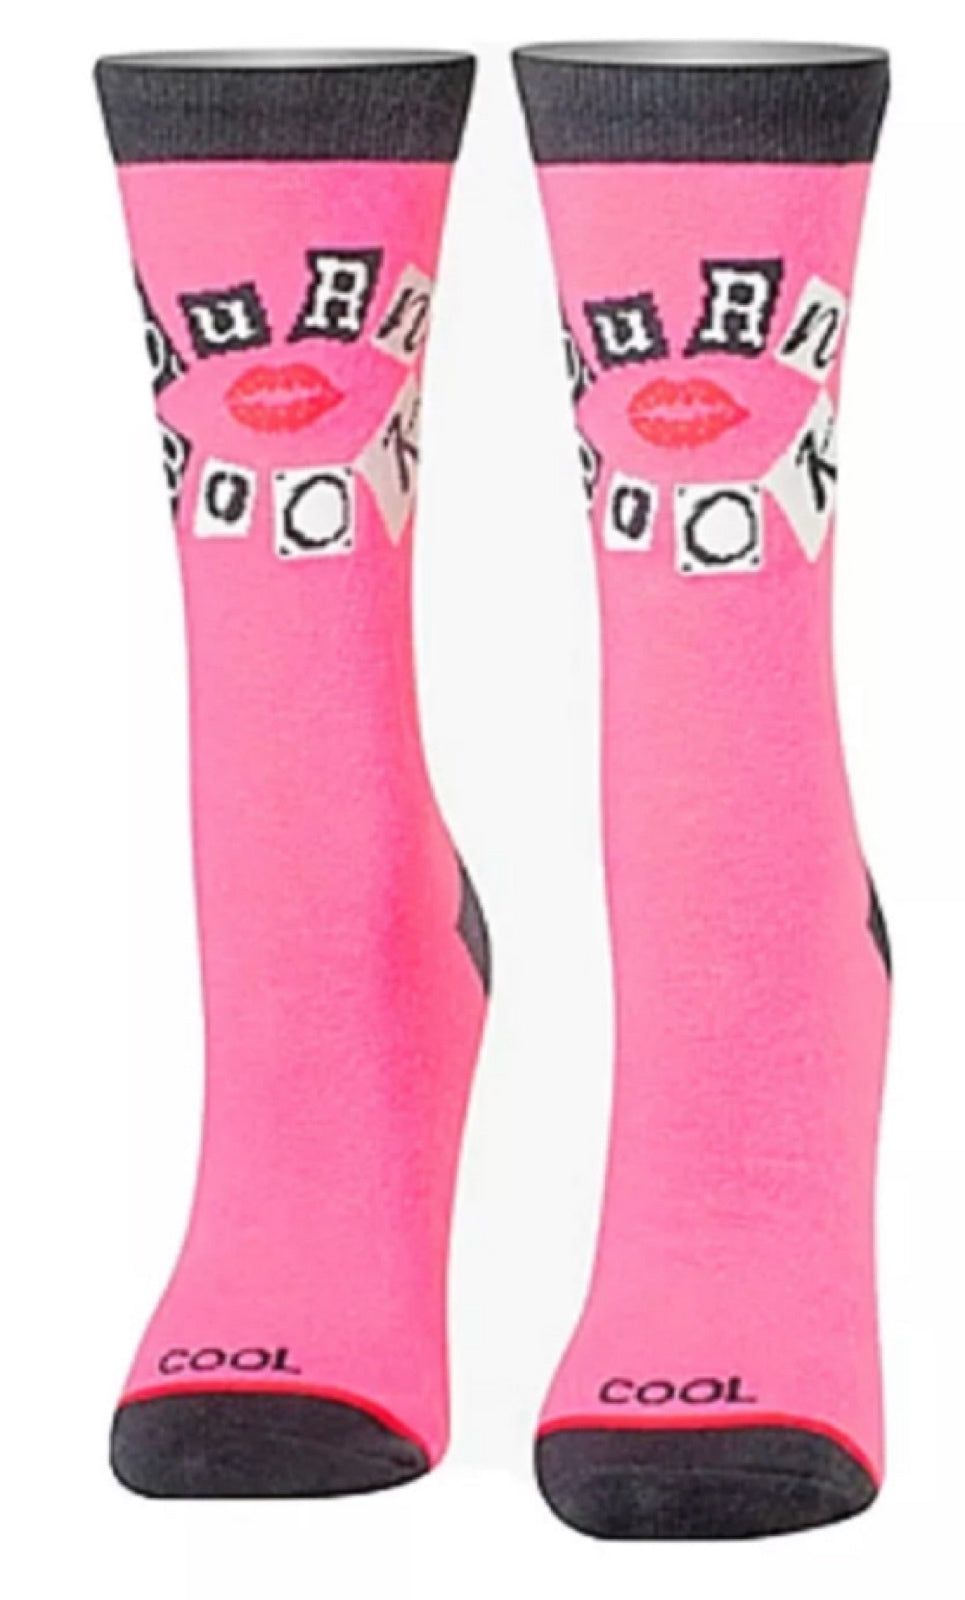 NWT Mean Girls Socks  Girls socks, Mean girls, Fashion tips